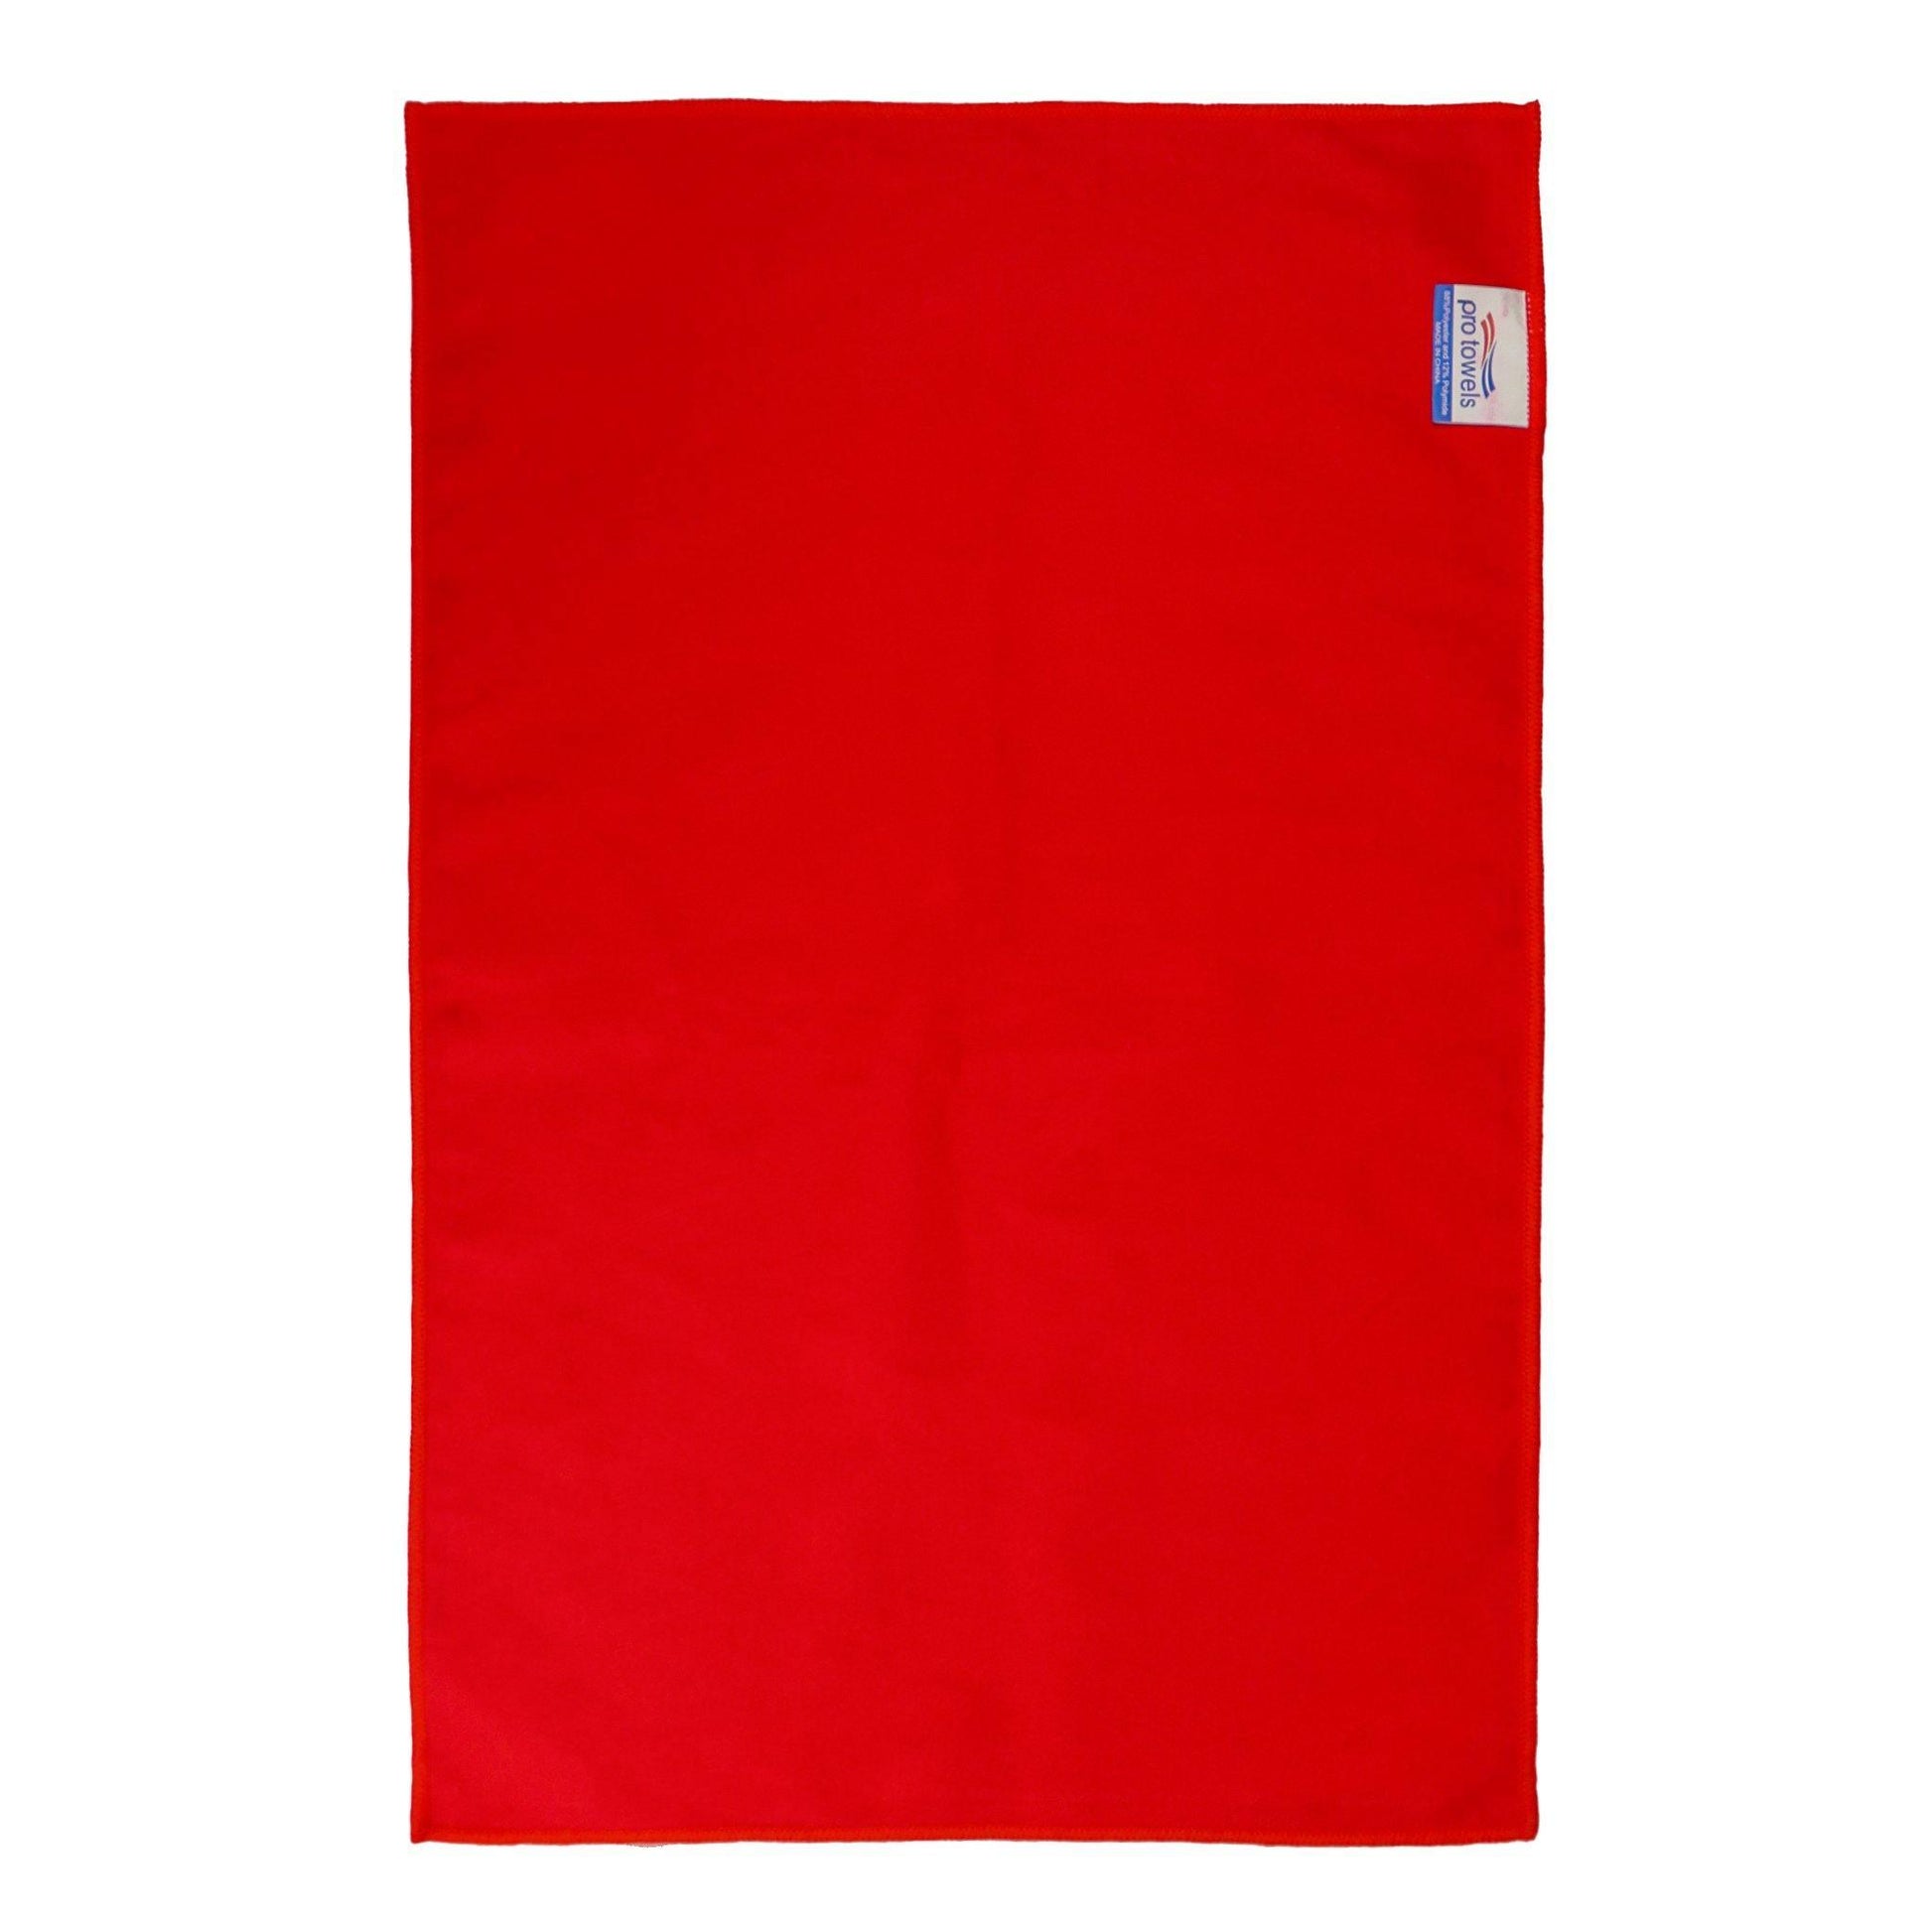 back of red towel no logo